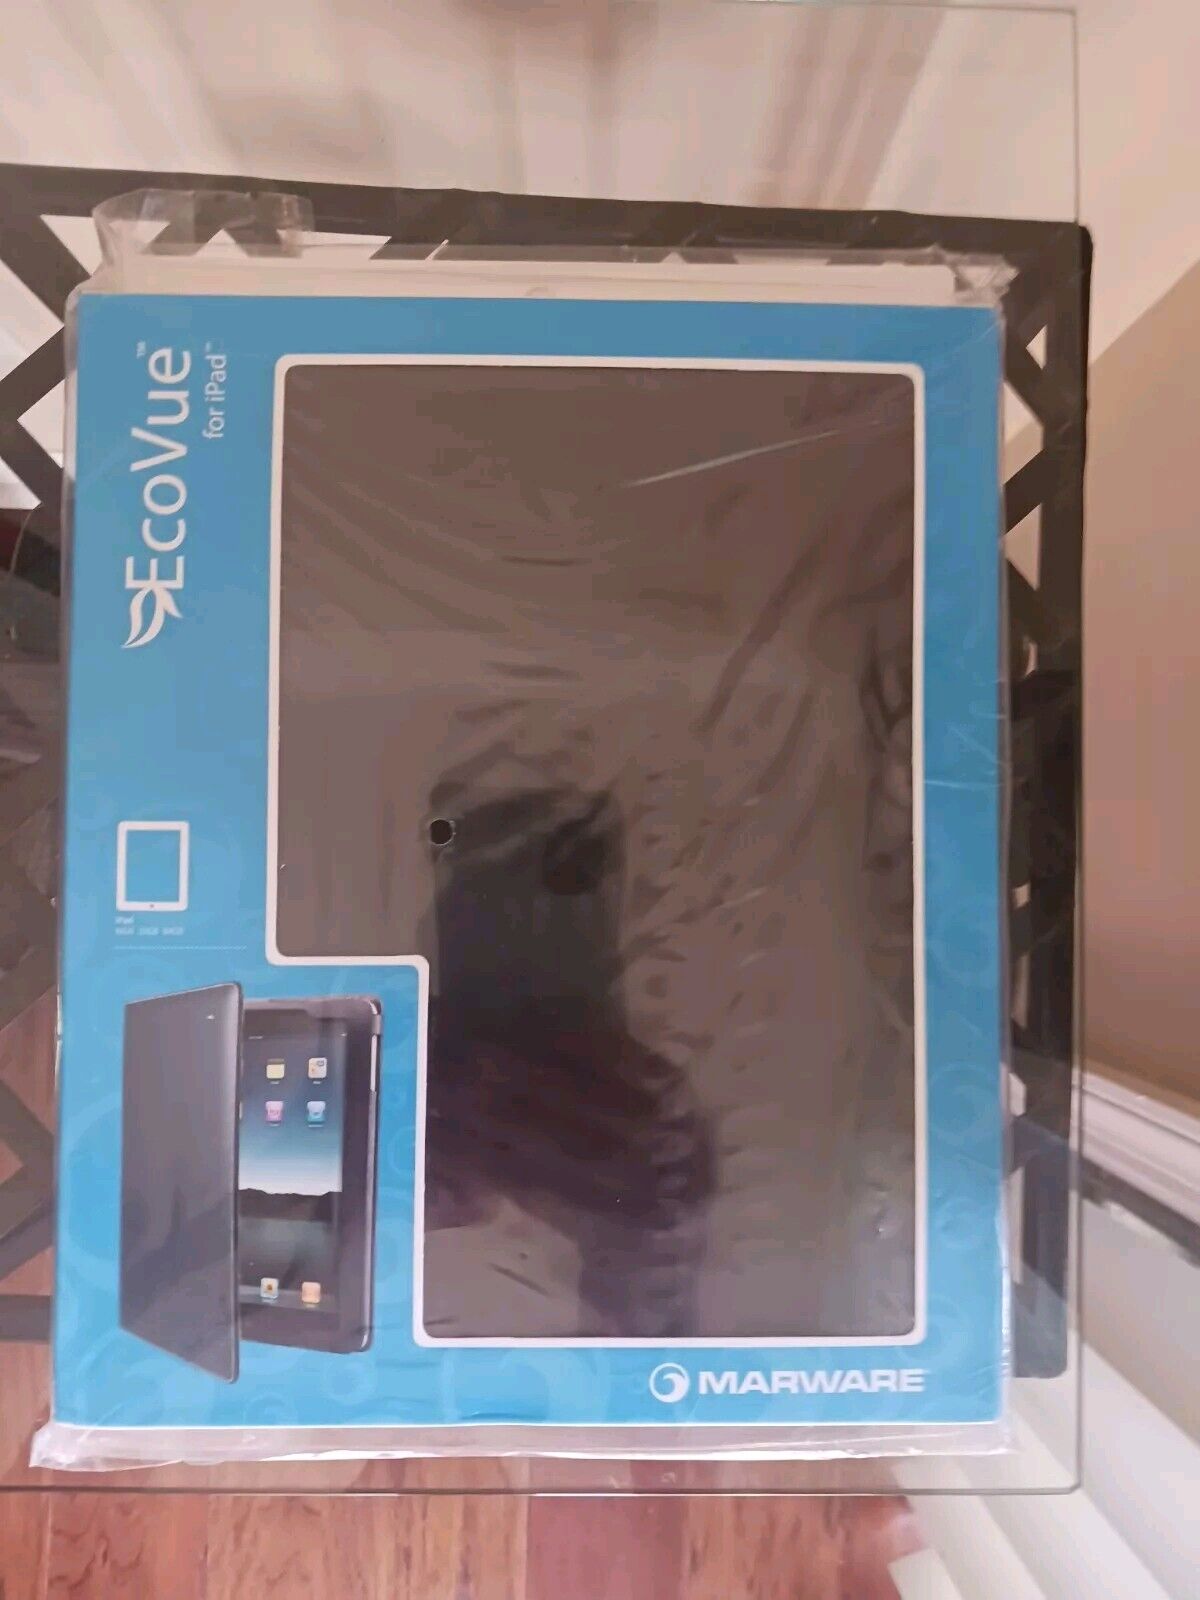 MARWARE Eco-Vue iPad Case; Brand New in the Plastic Wrap